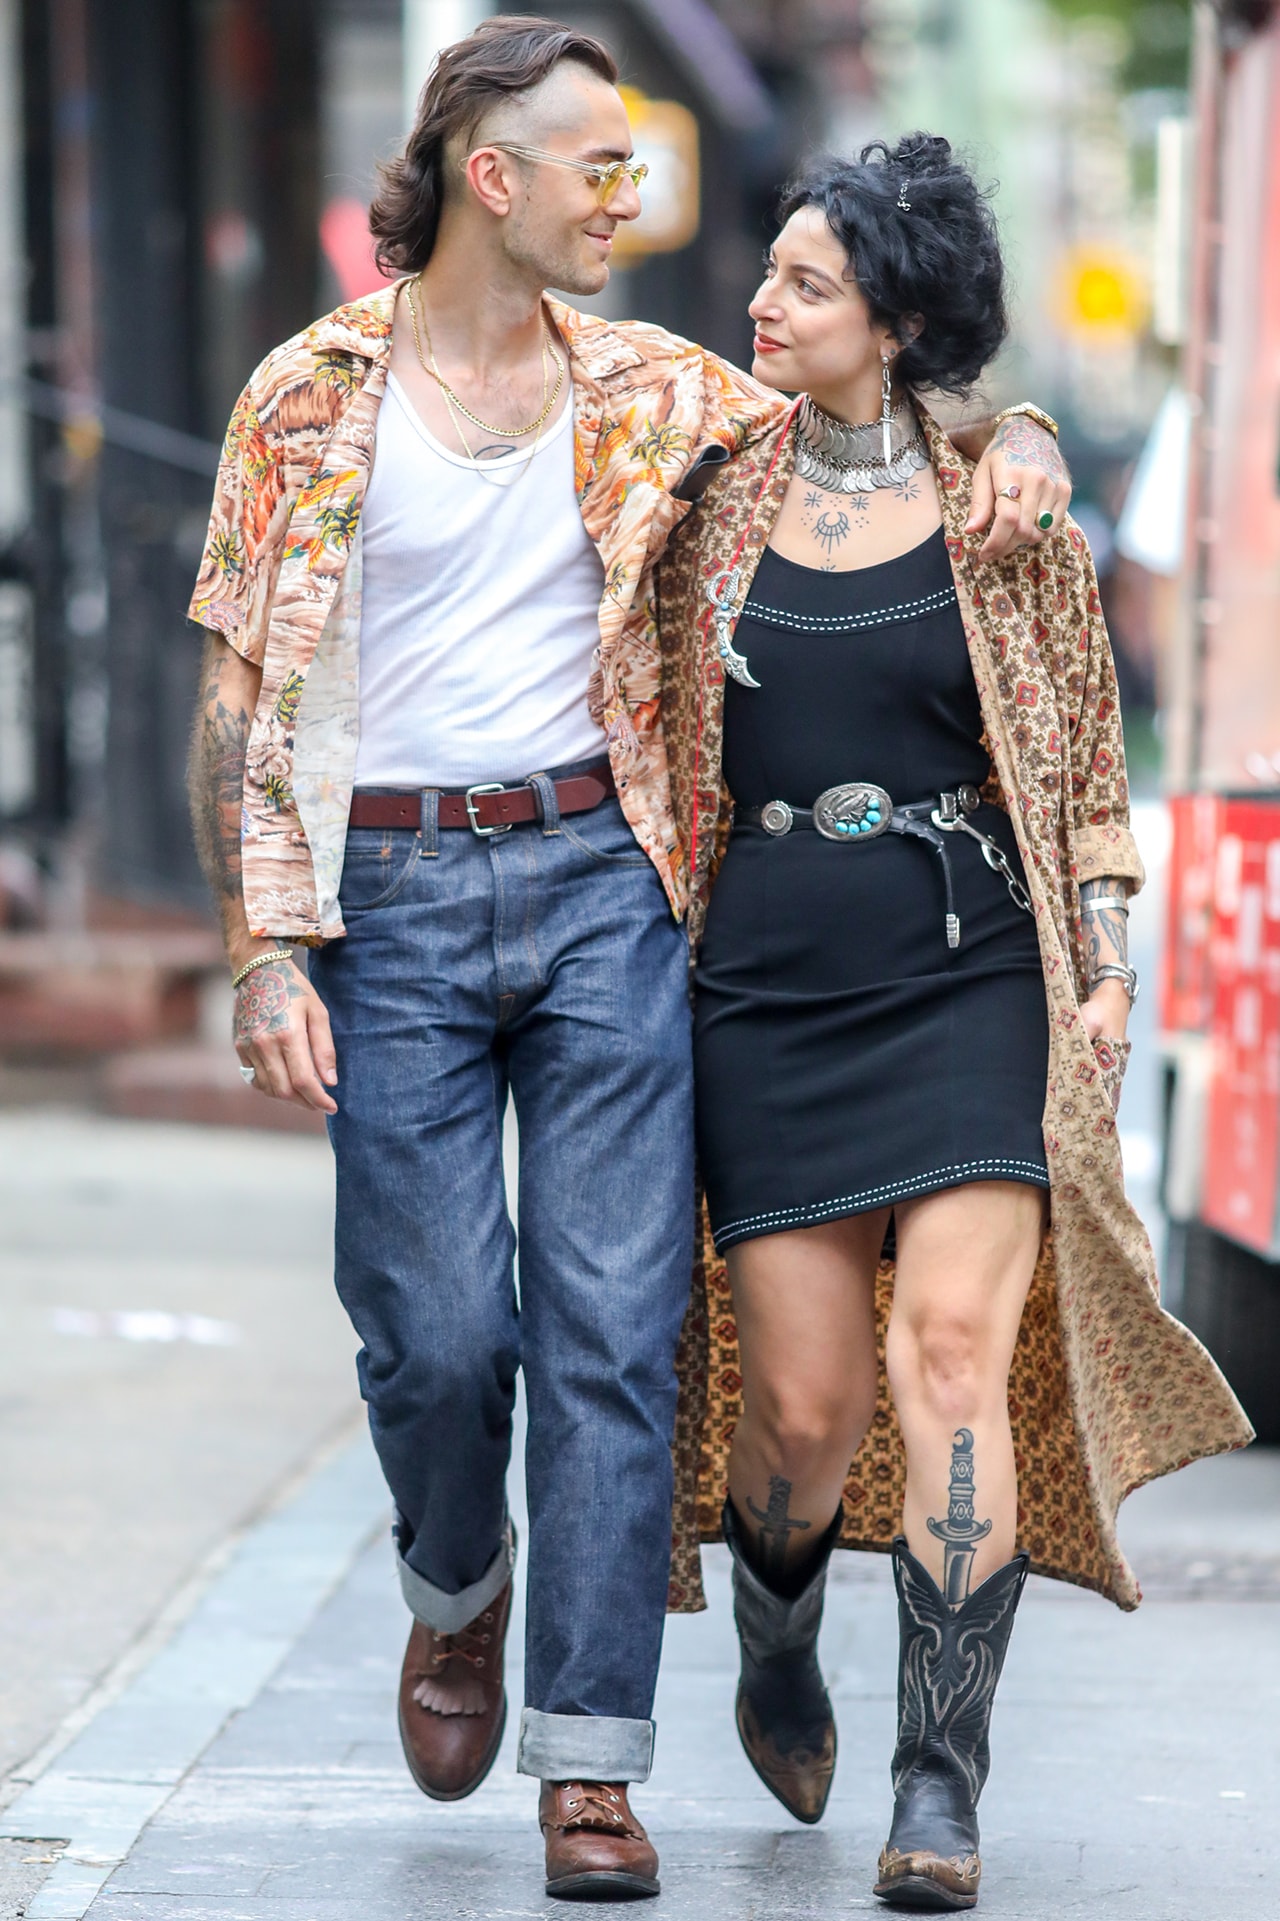 watchingnewyork photographer Johnny Cirillo New York City Street Style Fashion Paparazzi Candid Couple